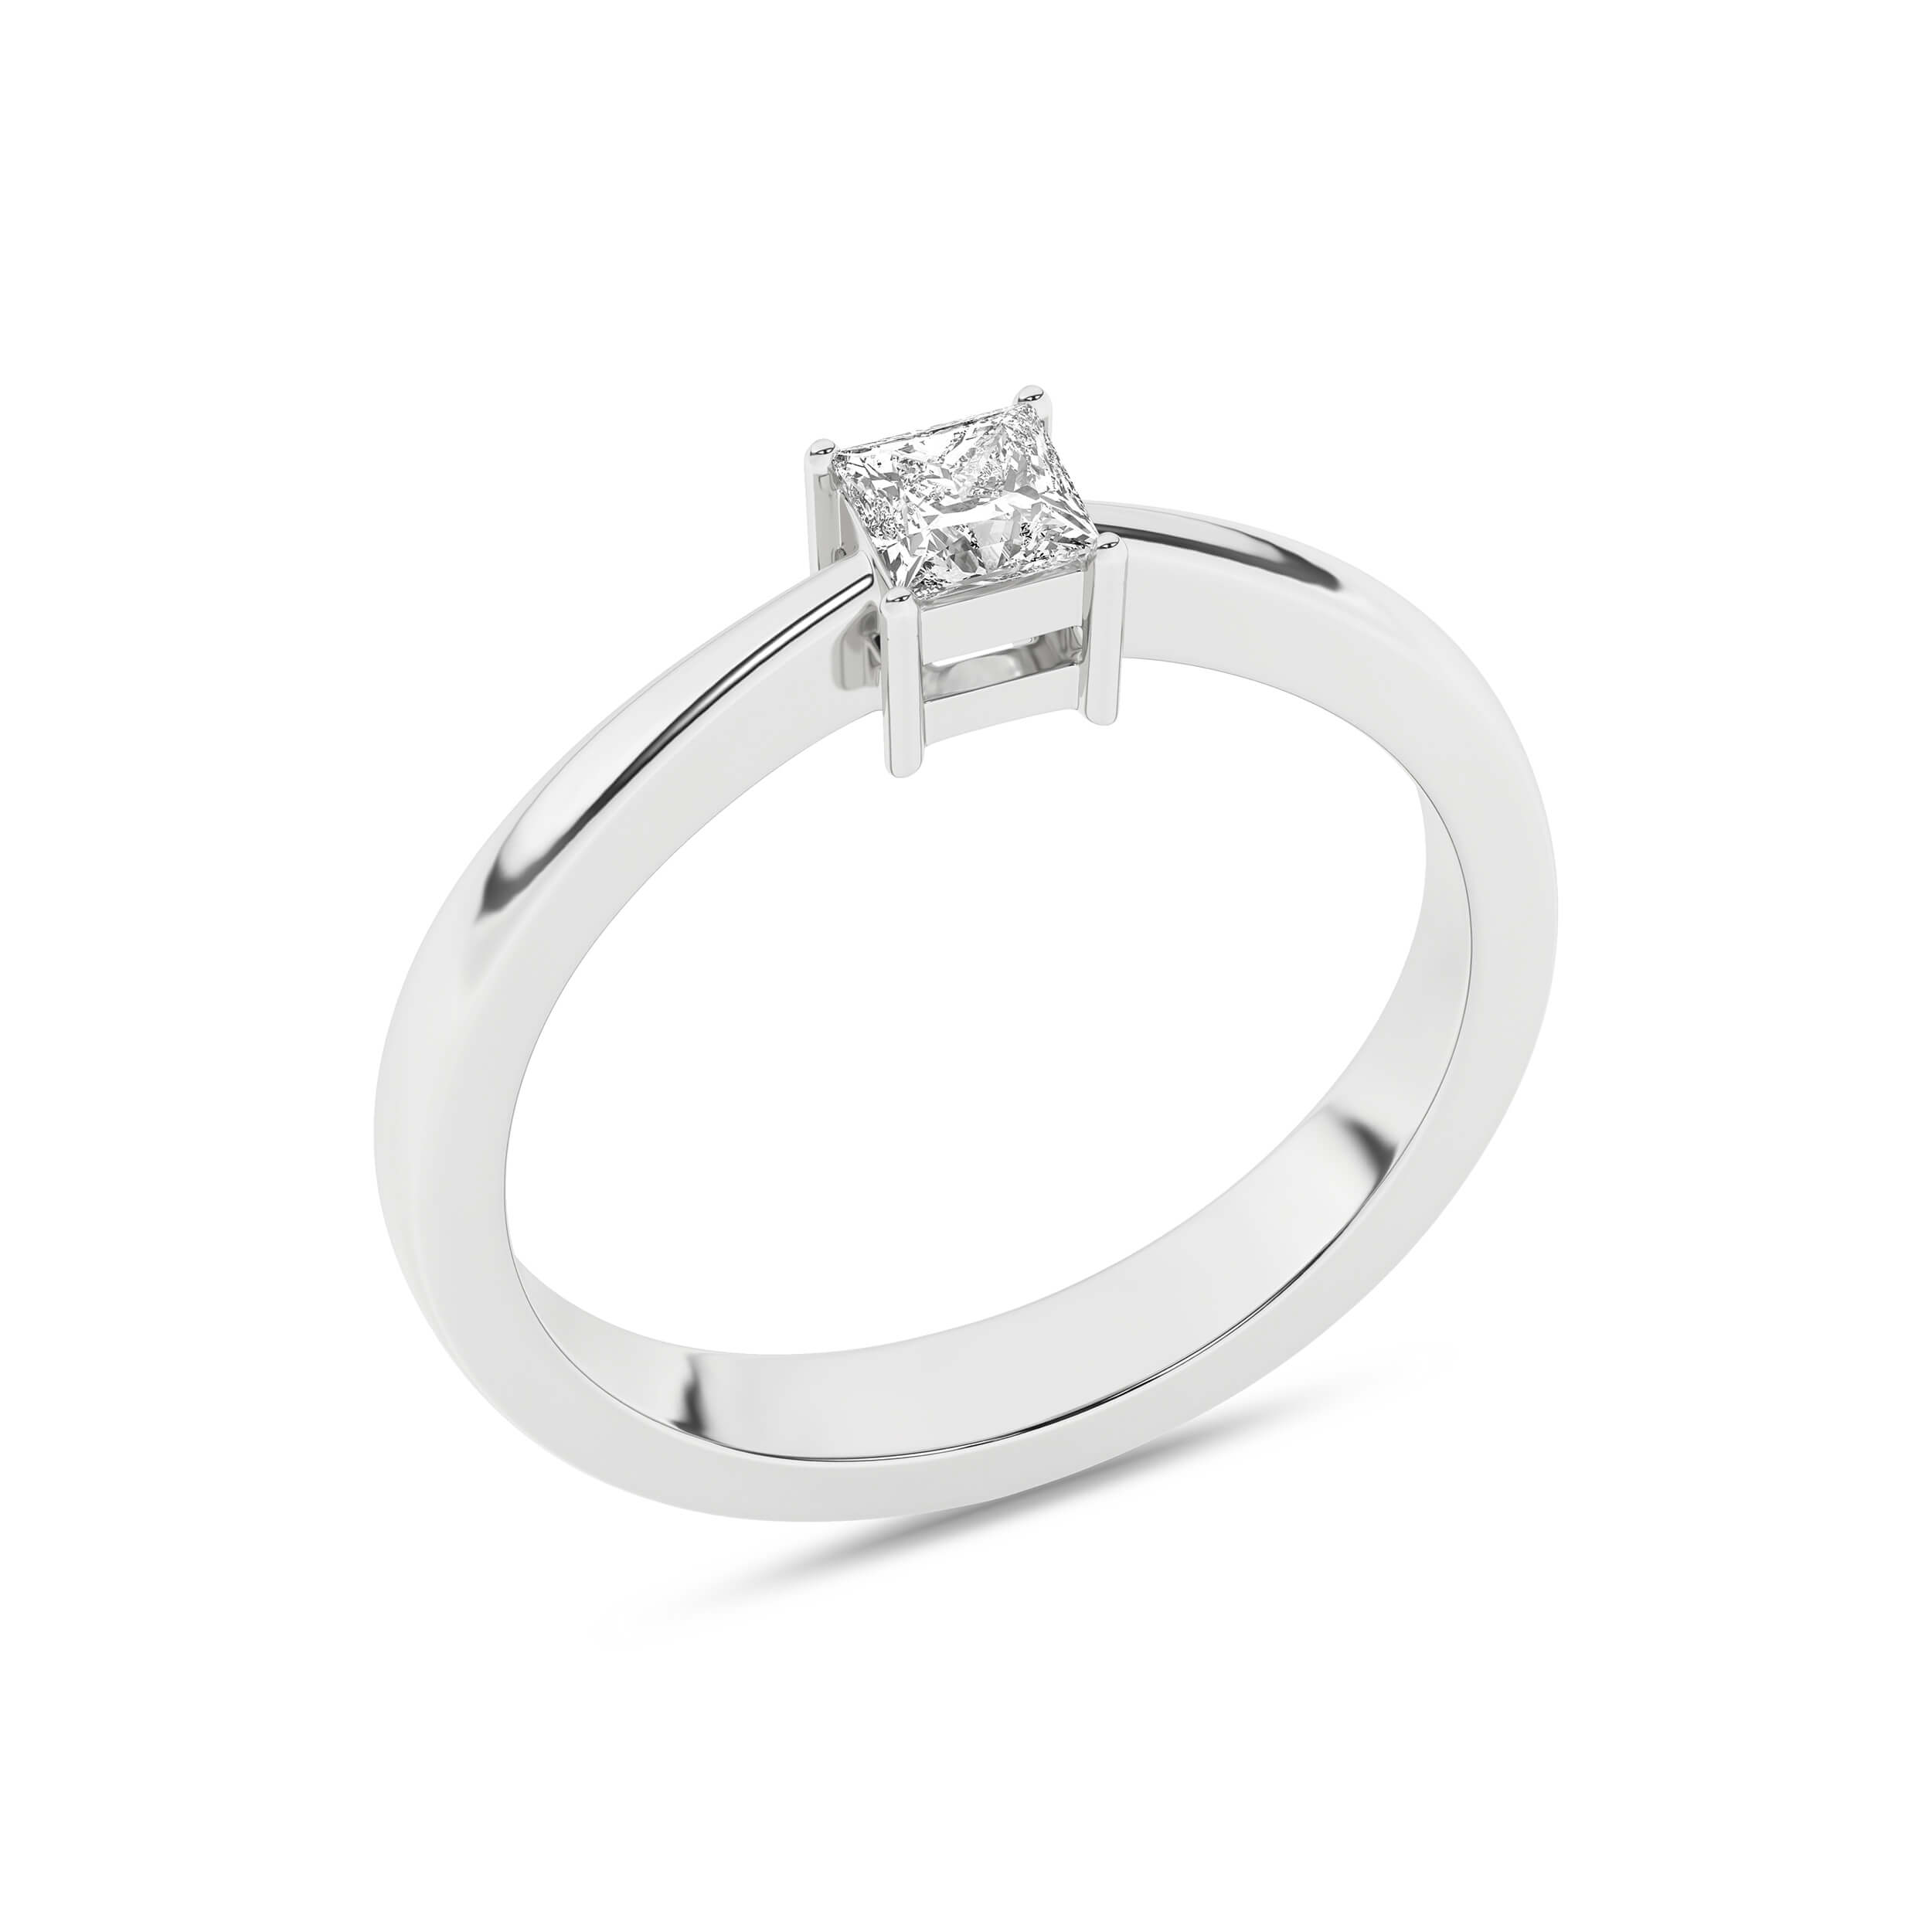 Inel de logodna din Aur Alb 14K cu Diamant 0.25Ct, articol RS1334, previzualizare foto 4